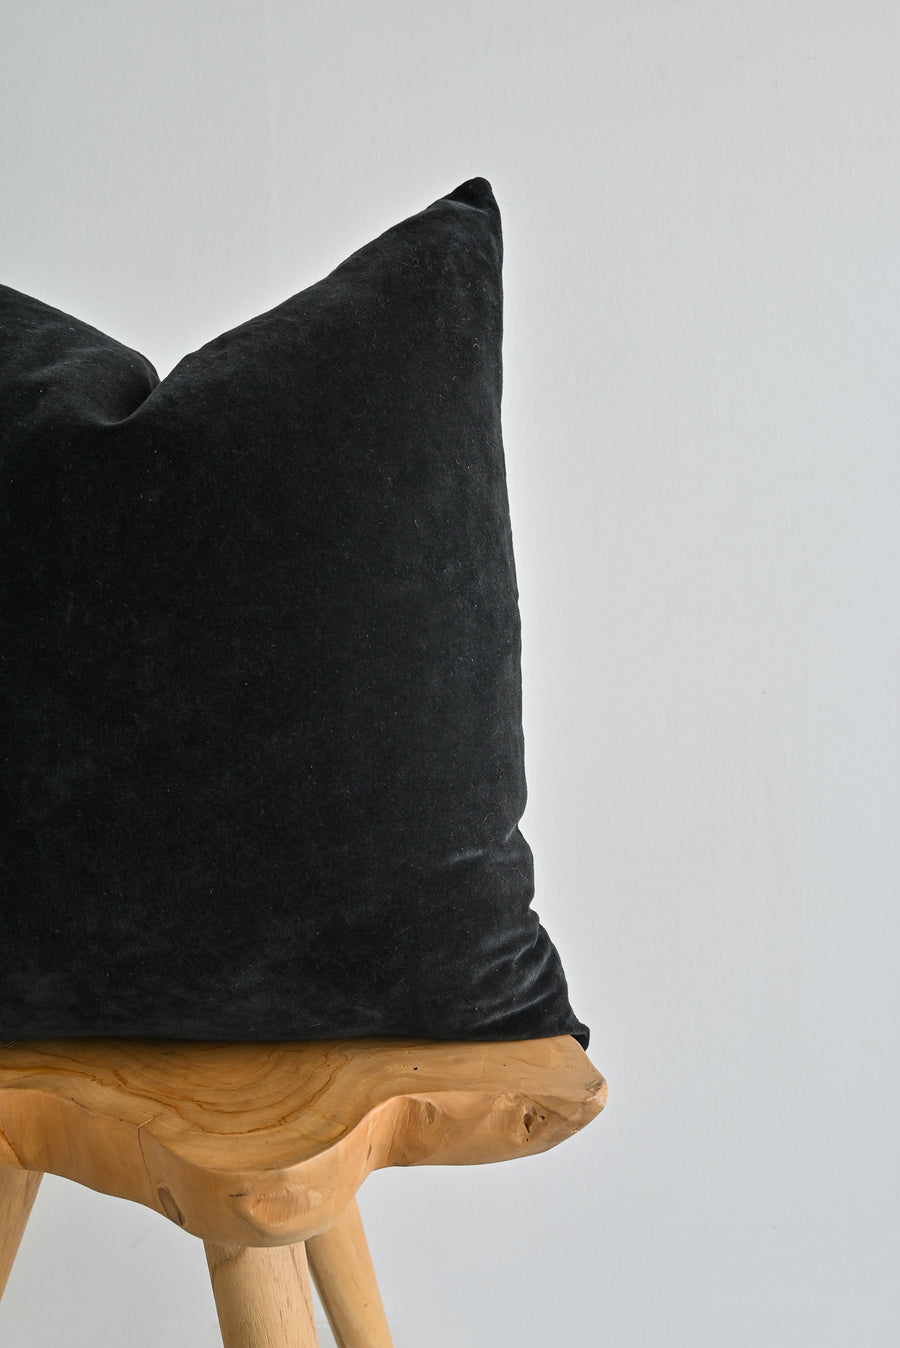 show_cushions_square_22_22_black_velvet_pillow